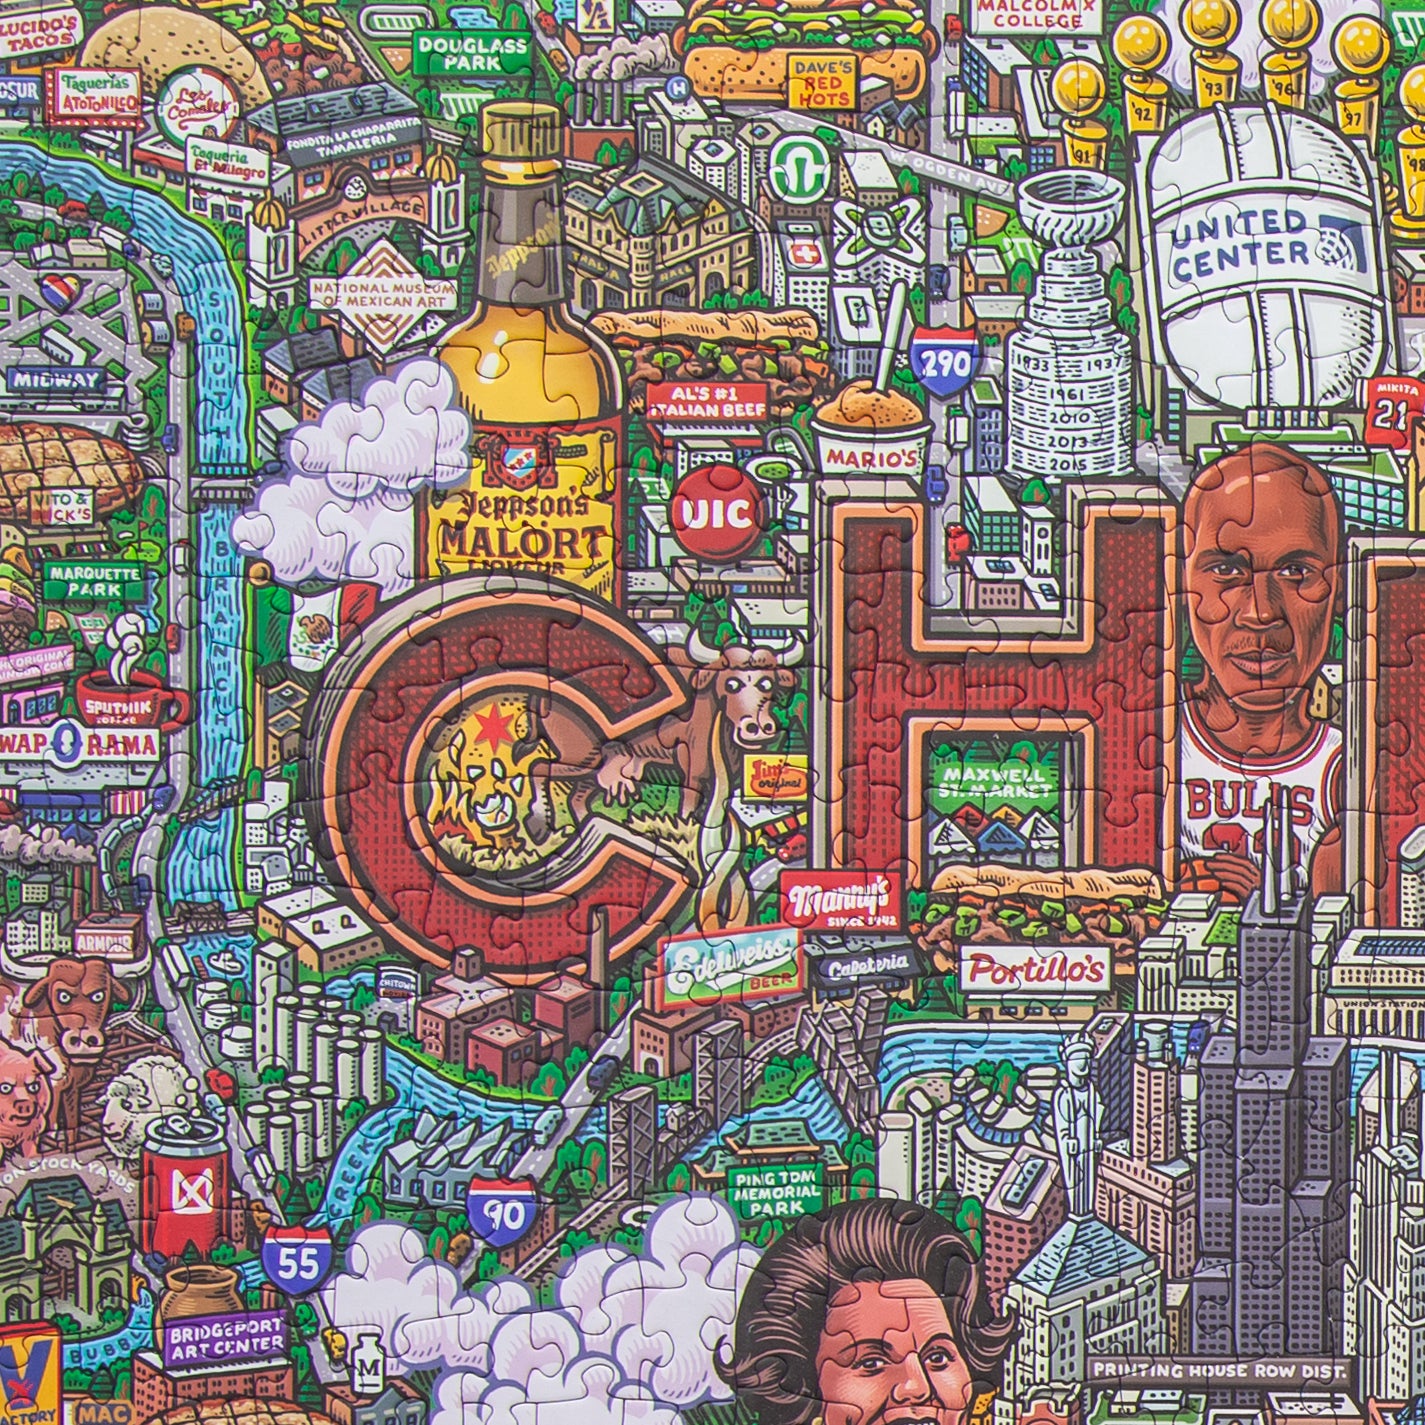 Chicago | 1,000 Piece Puzzle